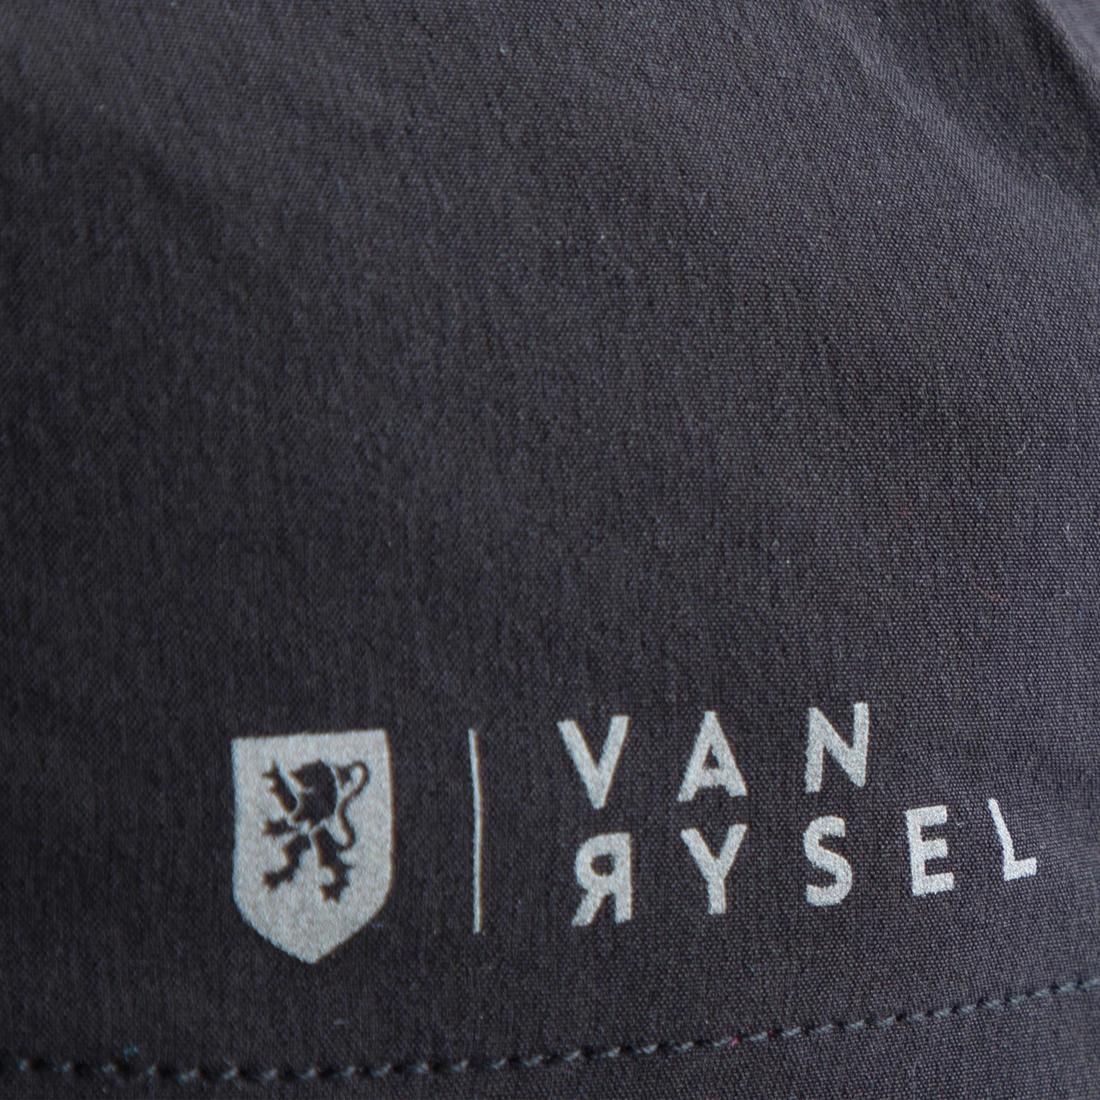 VAN RYSEL(ヴァンリーゼル) サイクリング キャップ ウルトラライト 520